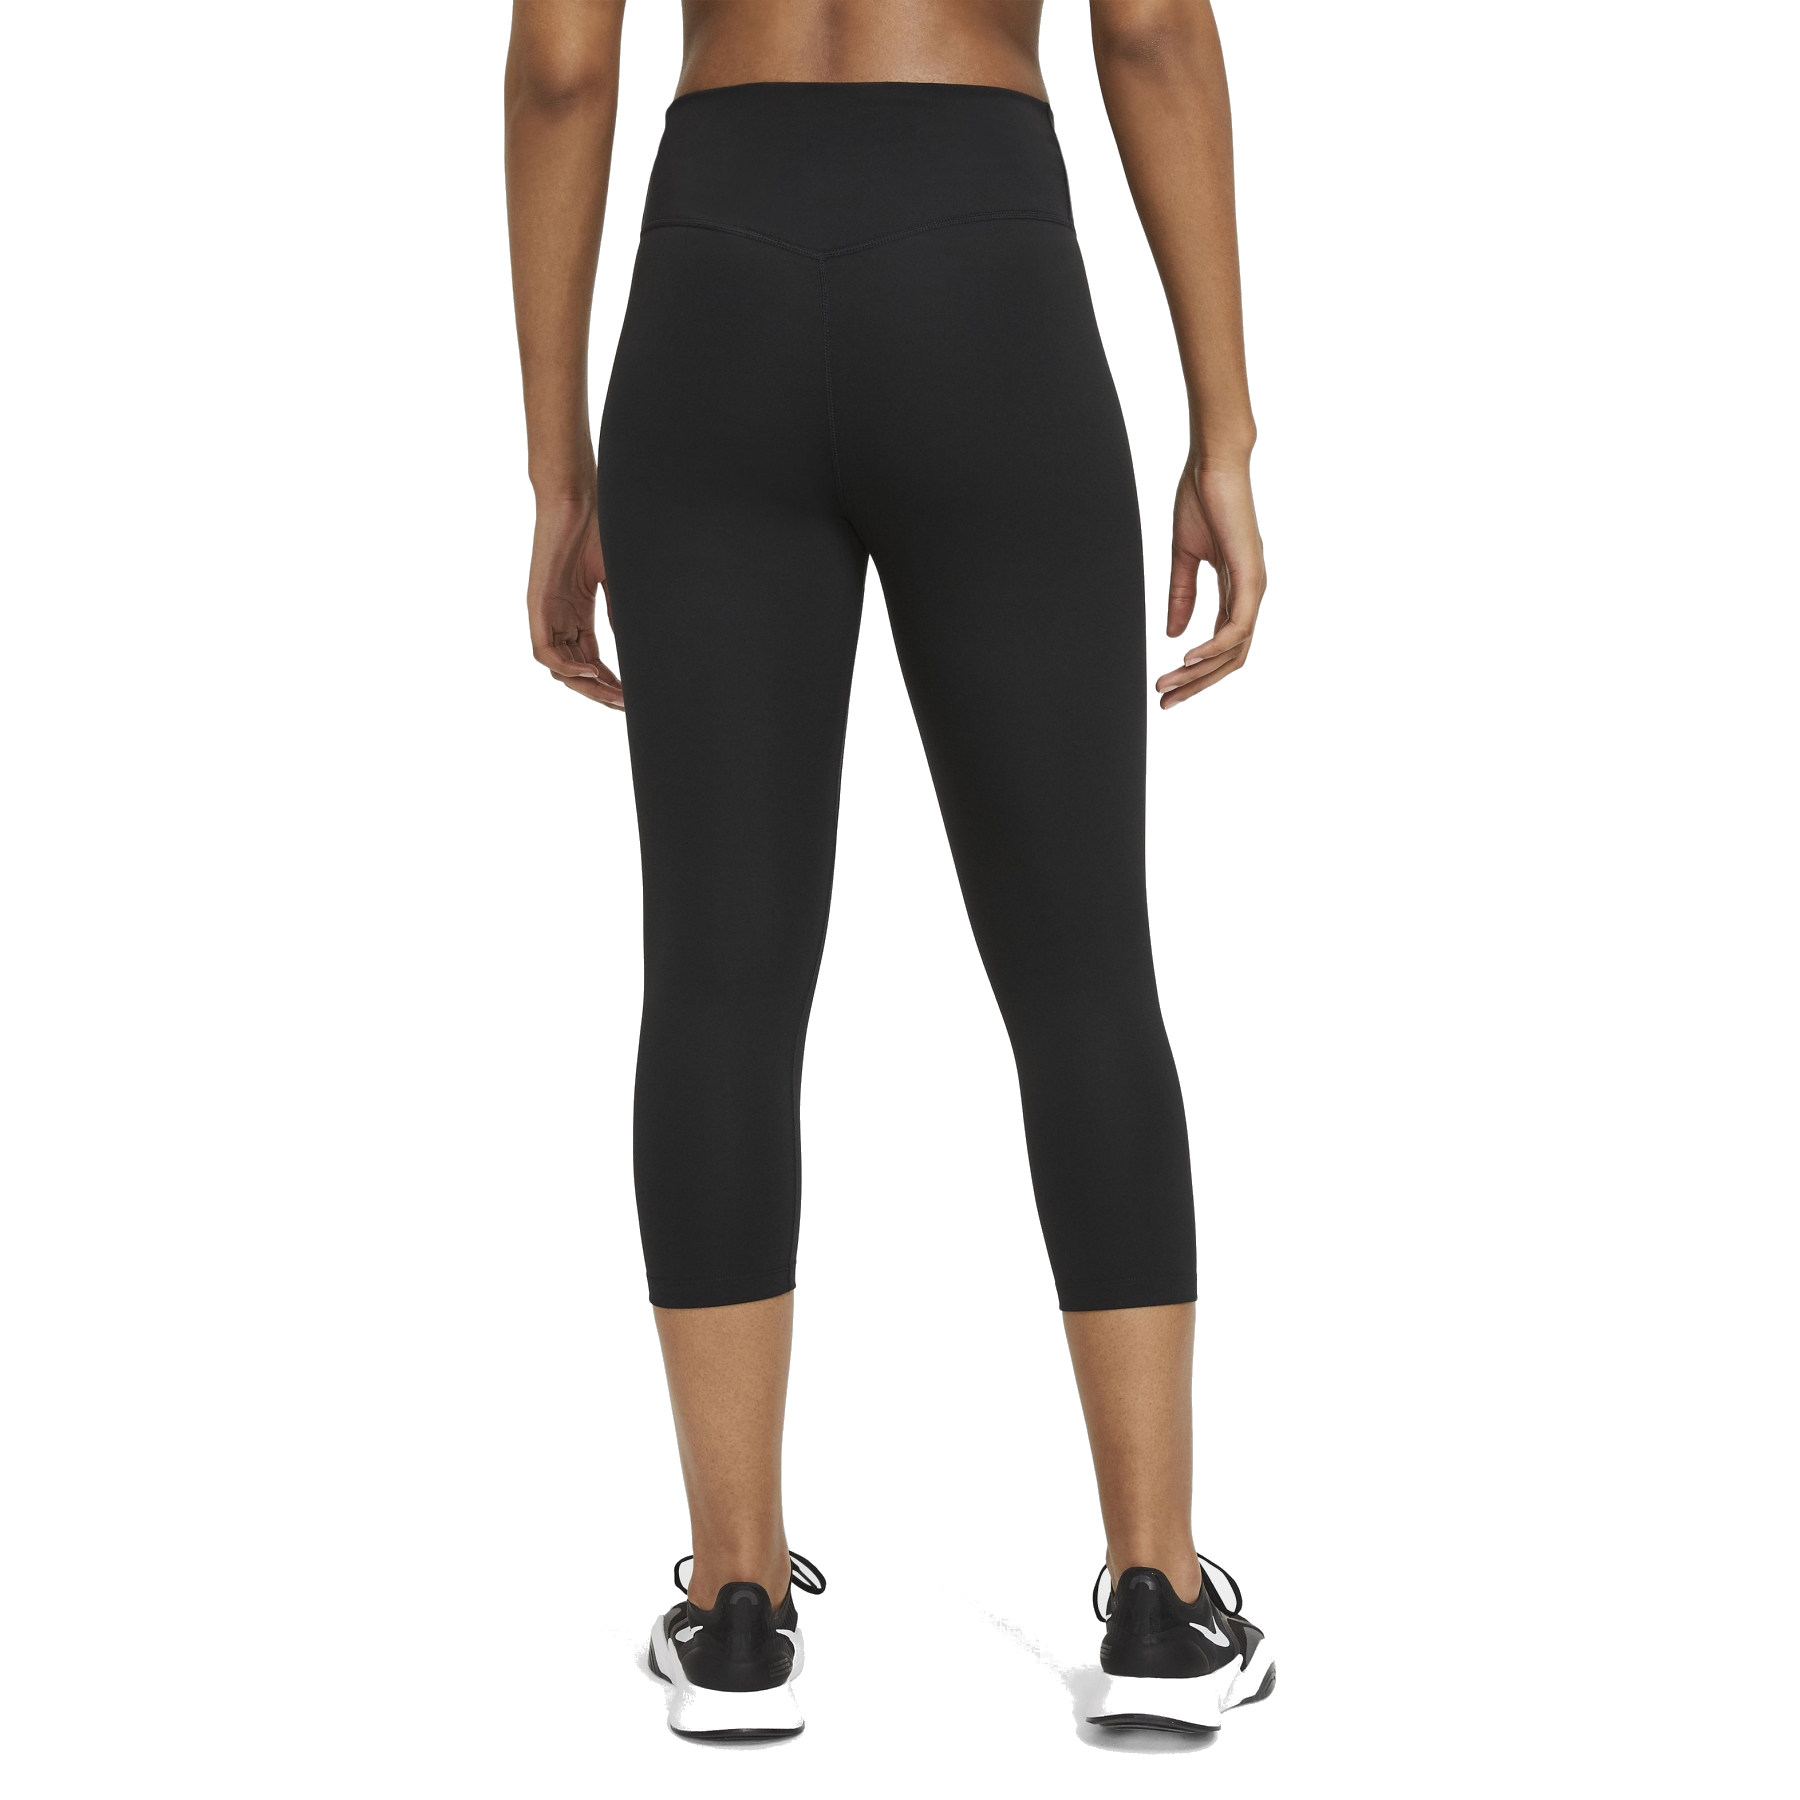 Nike One Capri Tights Women - black/white DD0245-010